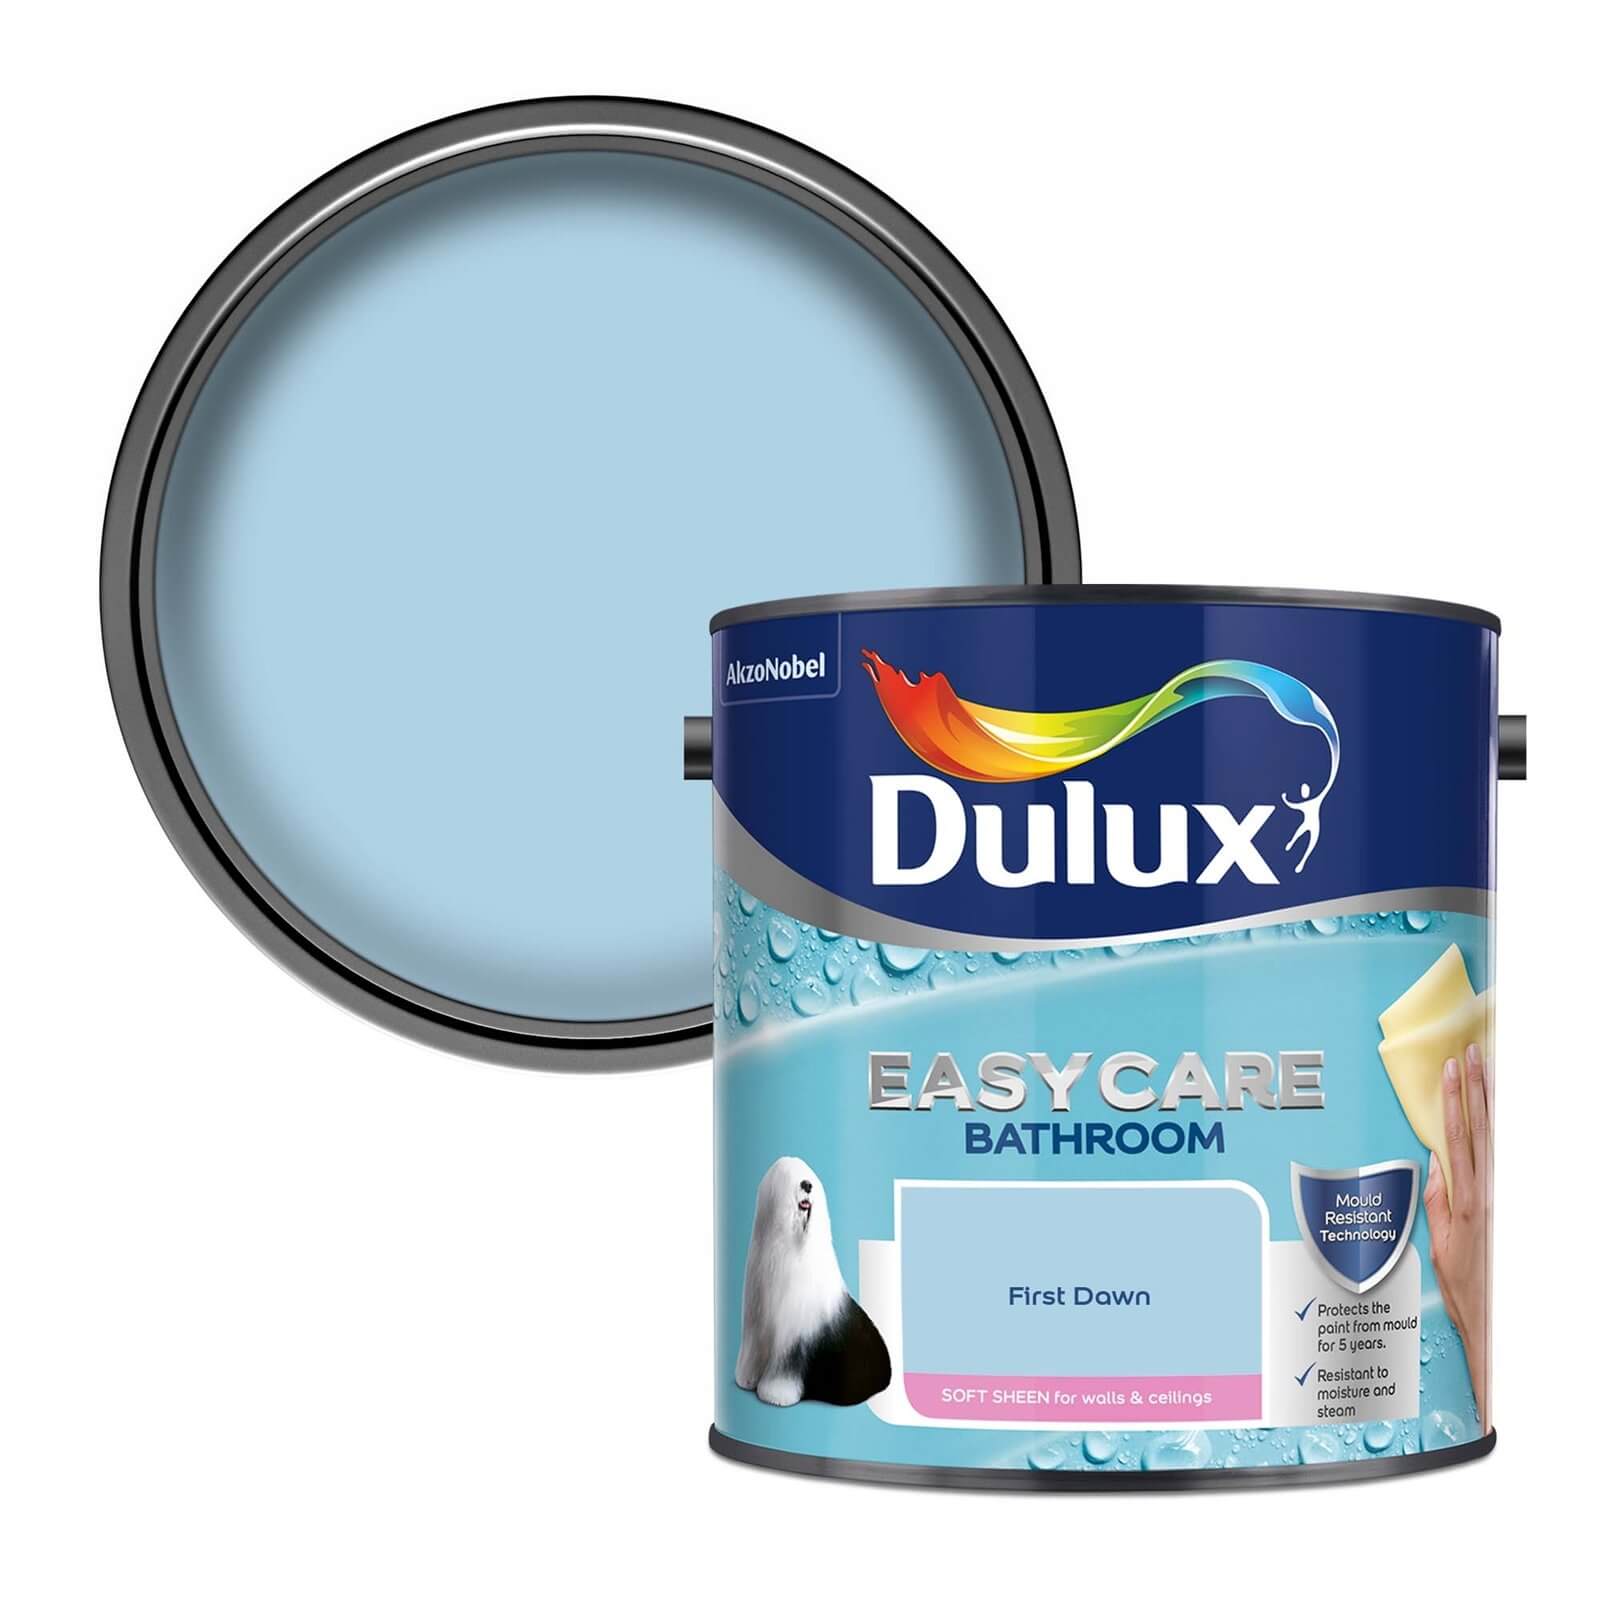 Dulux Easycare Bathroom First Dawn Blue Soft Sheen Paint - 2.5L